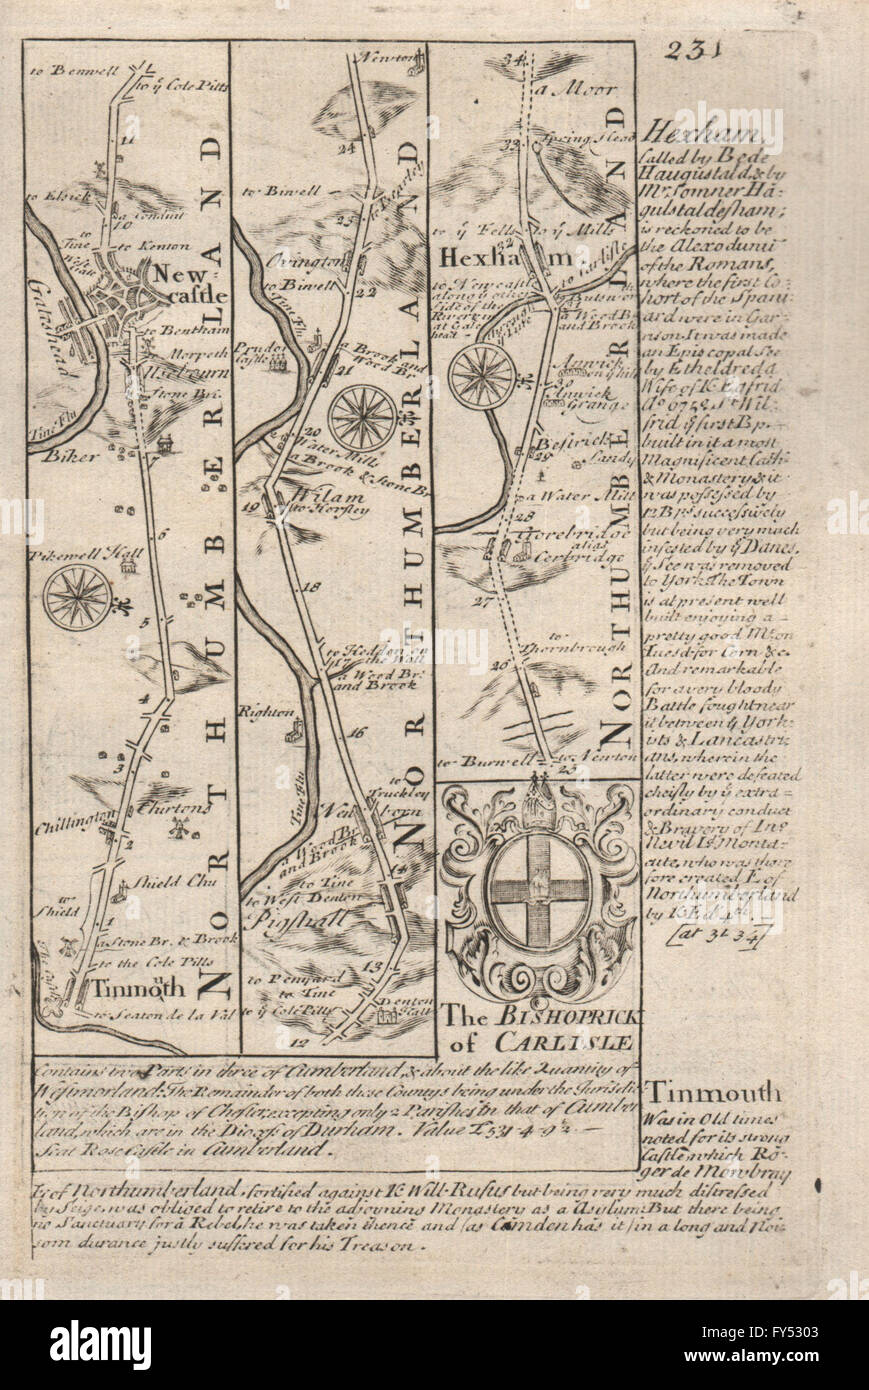 Tynemouth-Newcastle su Tyne-Ovington-Hexham road map da OWEN & BOWEN, 1753 Foto Stock